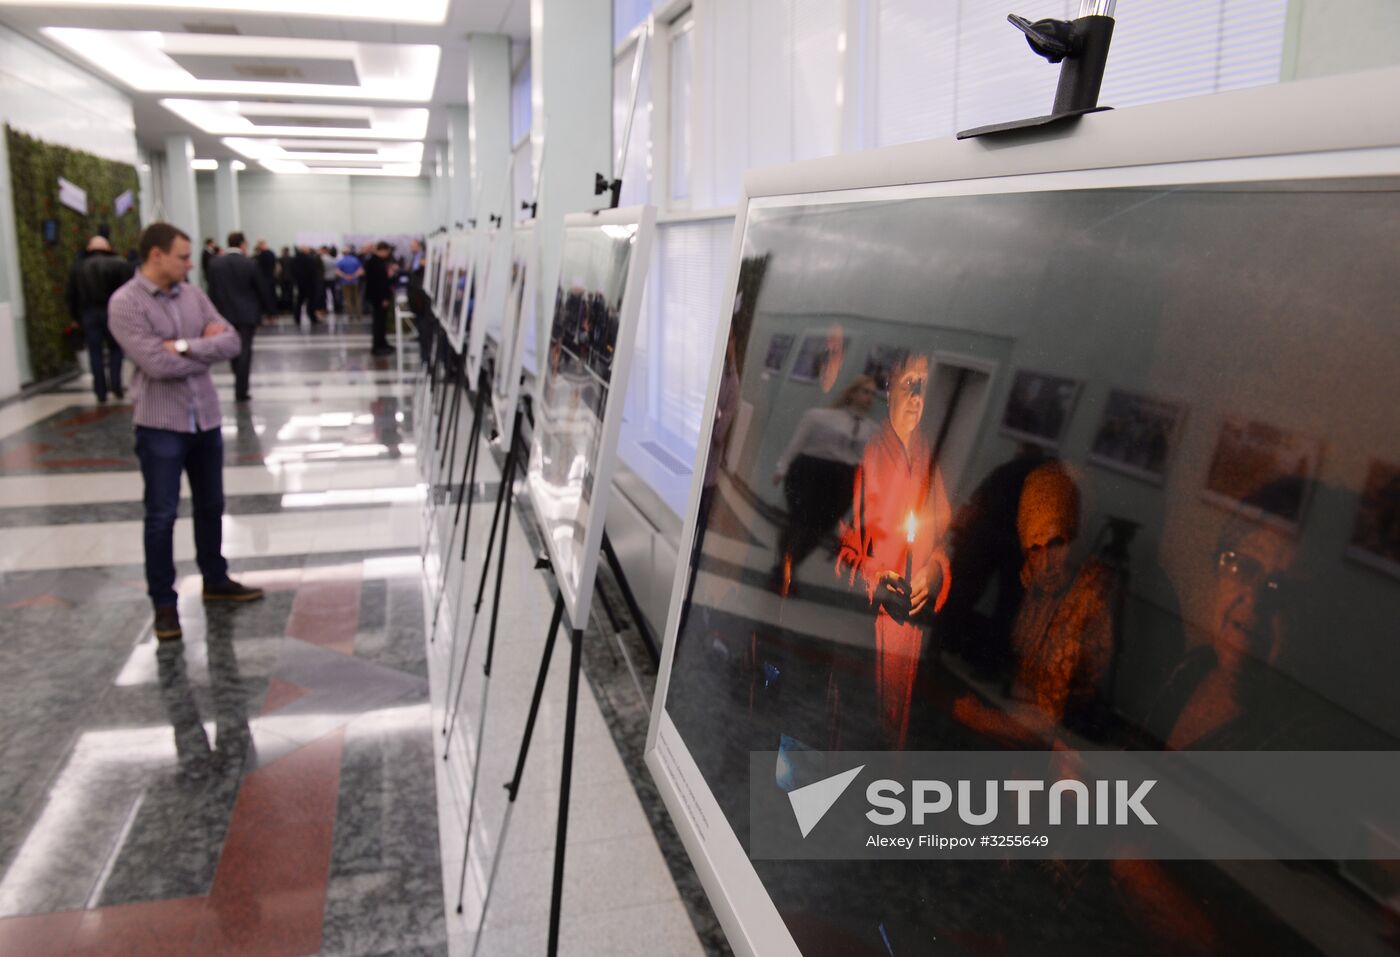 Journalist's Duty photo exhibit opens at State Duma